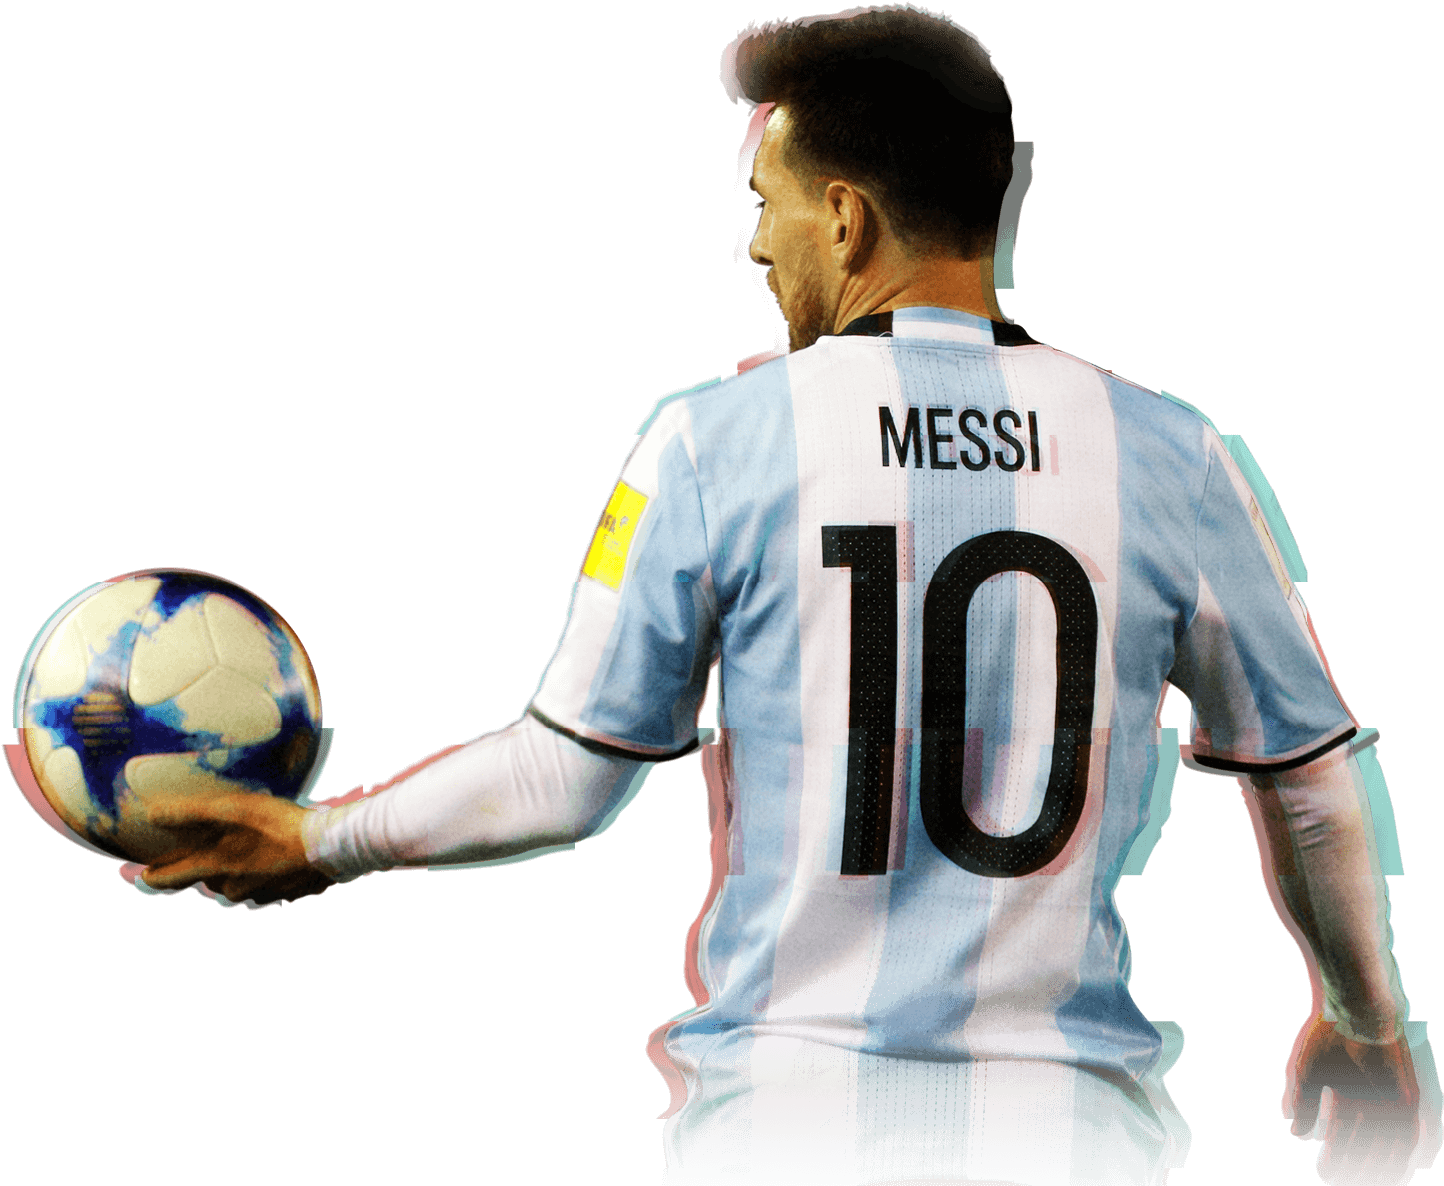 Messi Number10 Argentina Jersey PNG image